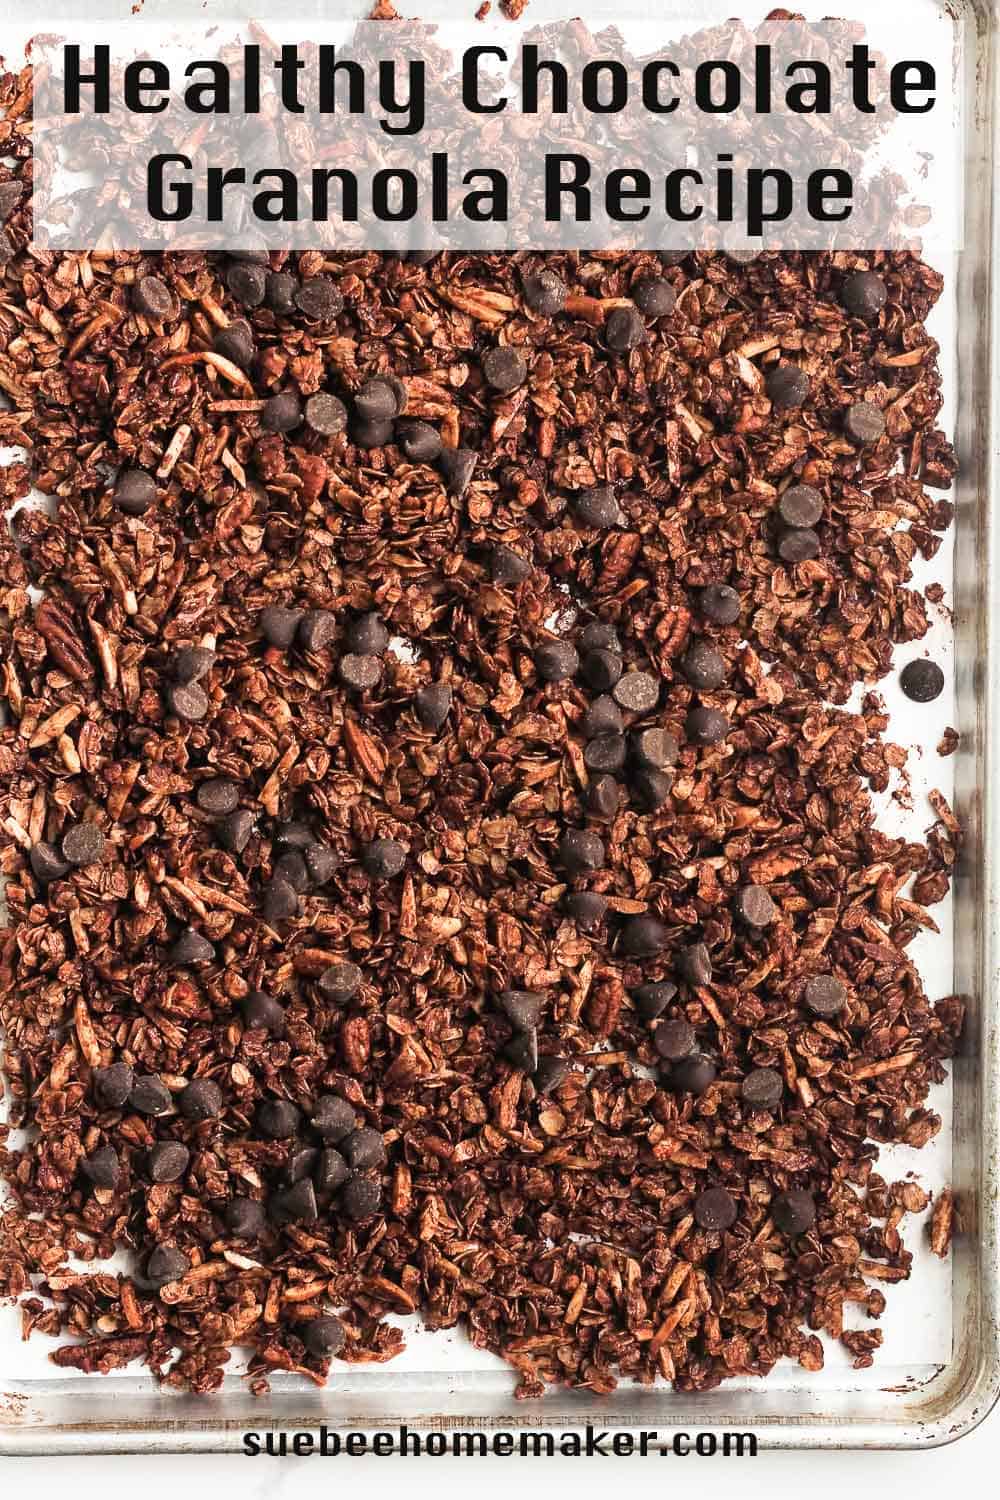 Overhead shot of a sheet pan of healthy chocolate granola.